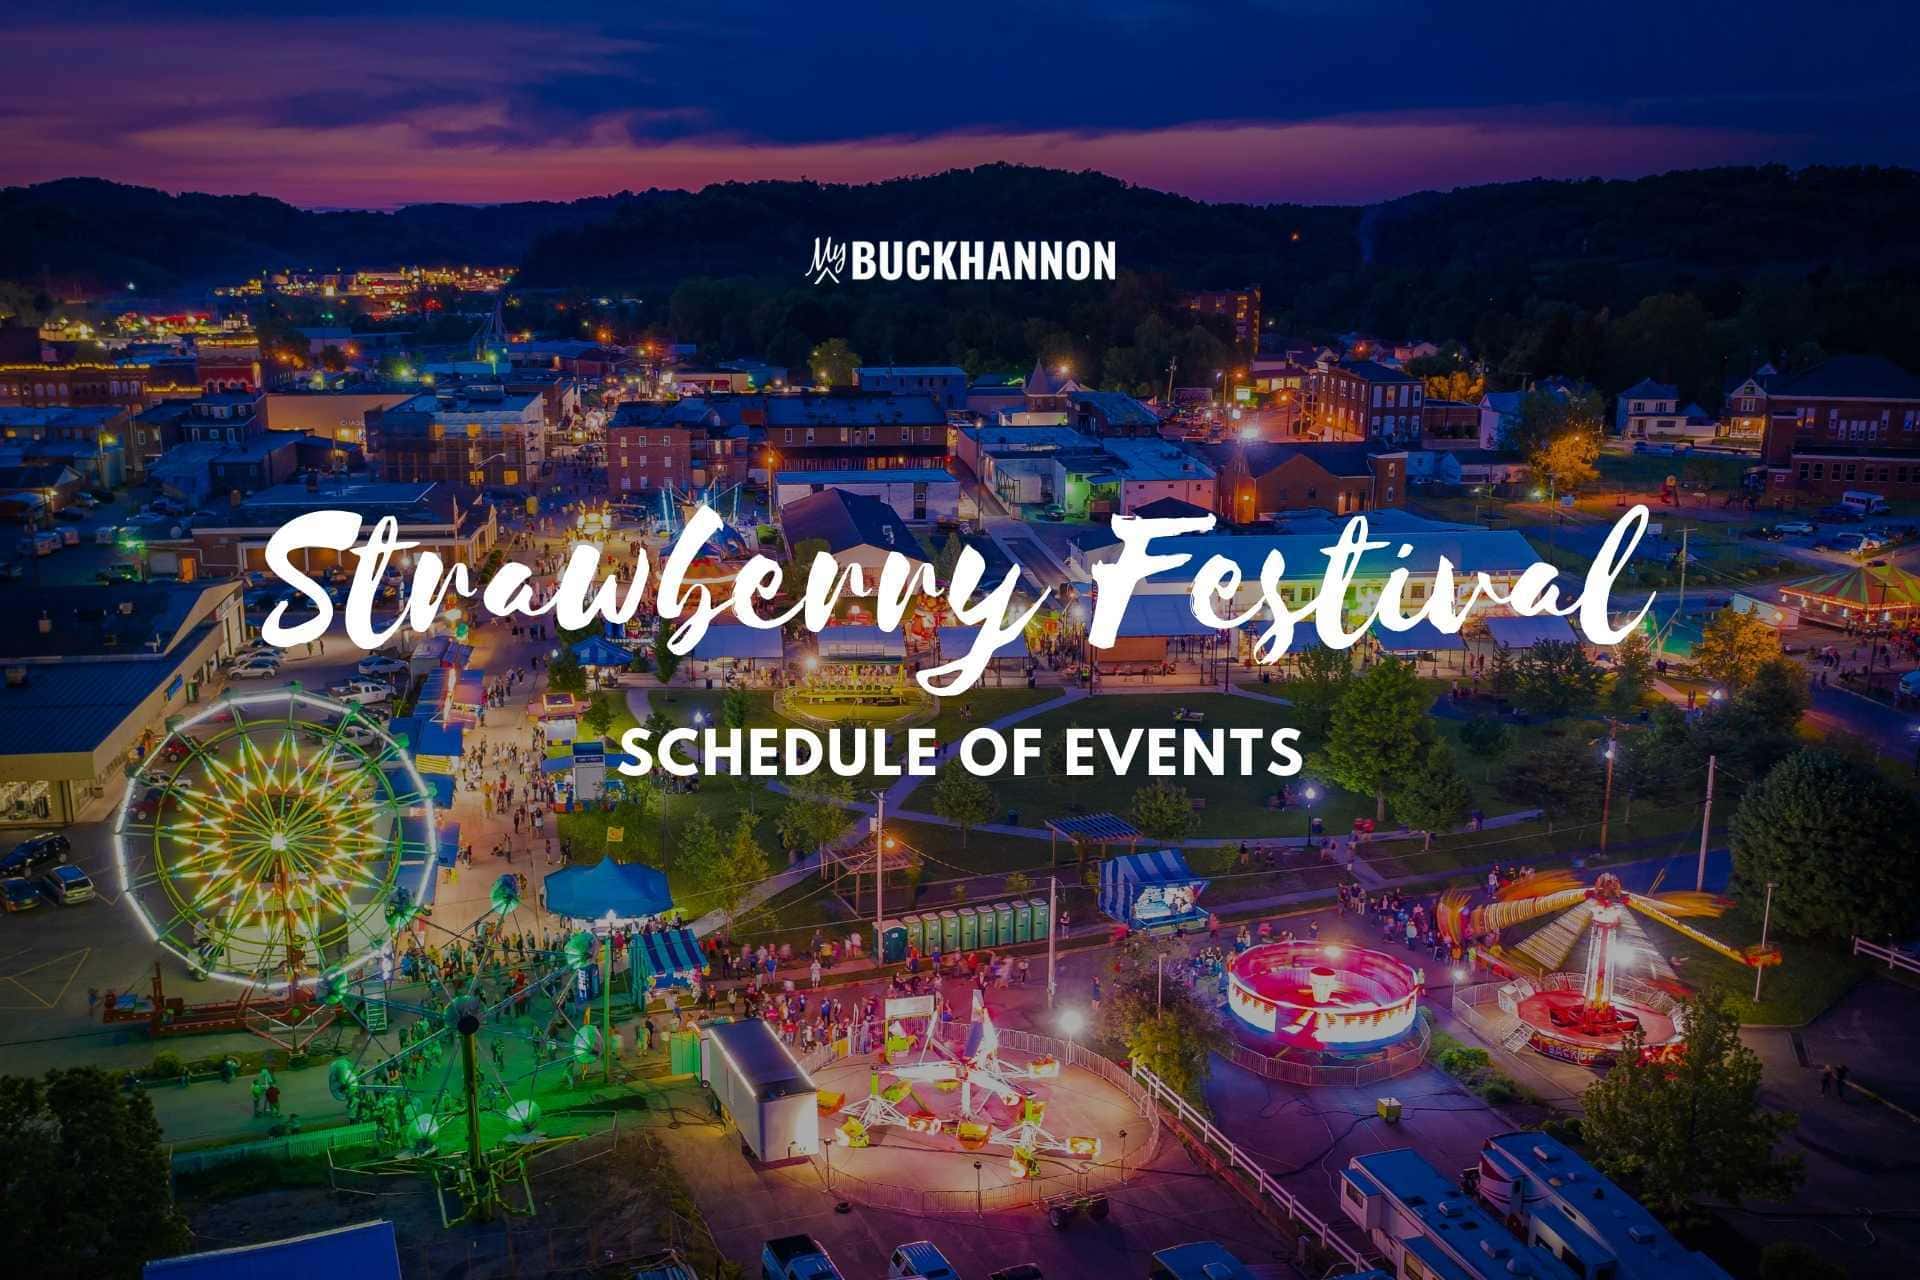 Strawberry Festival Schedule